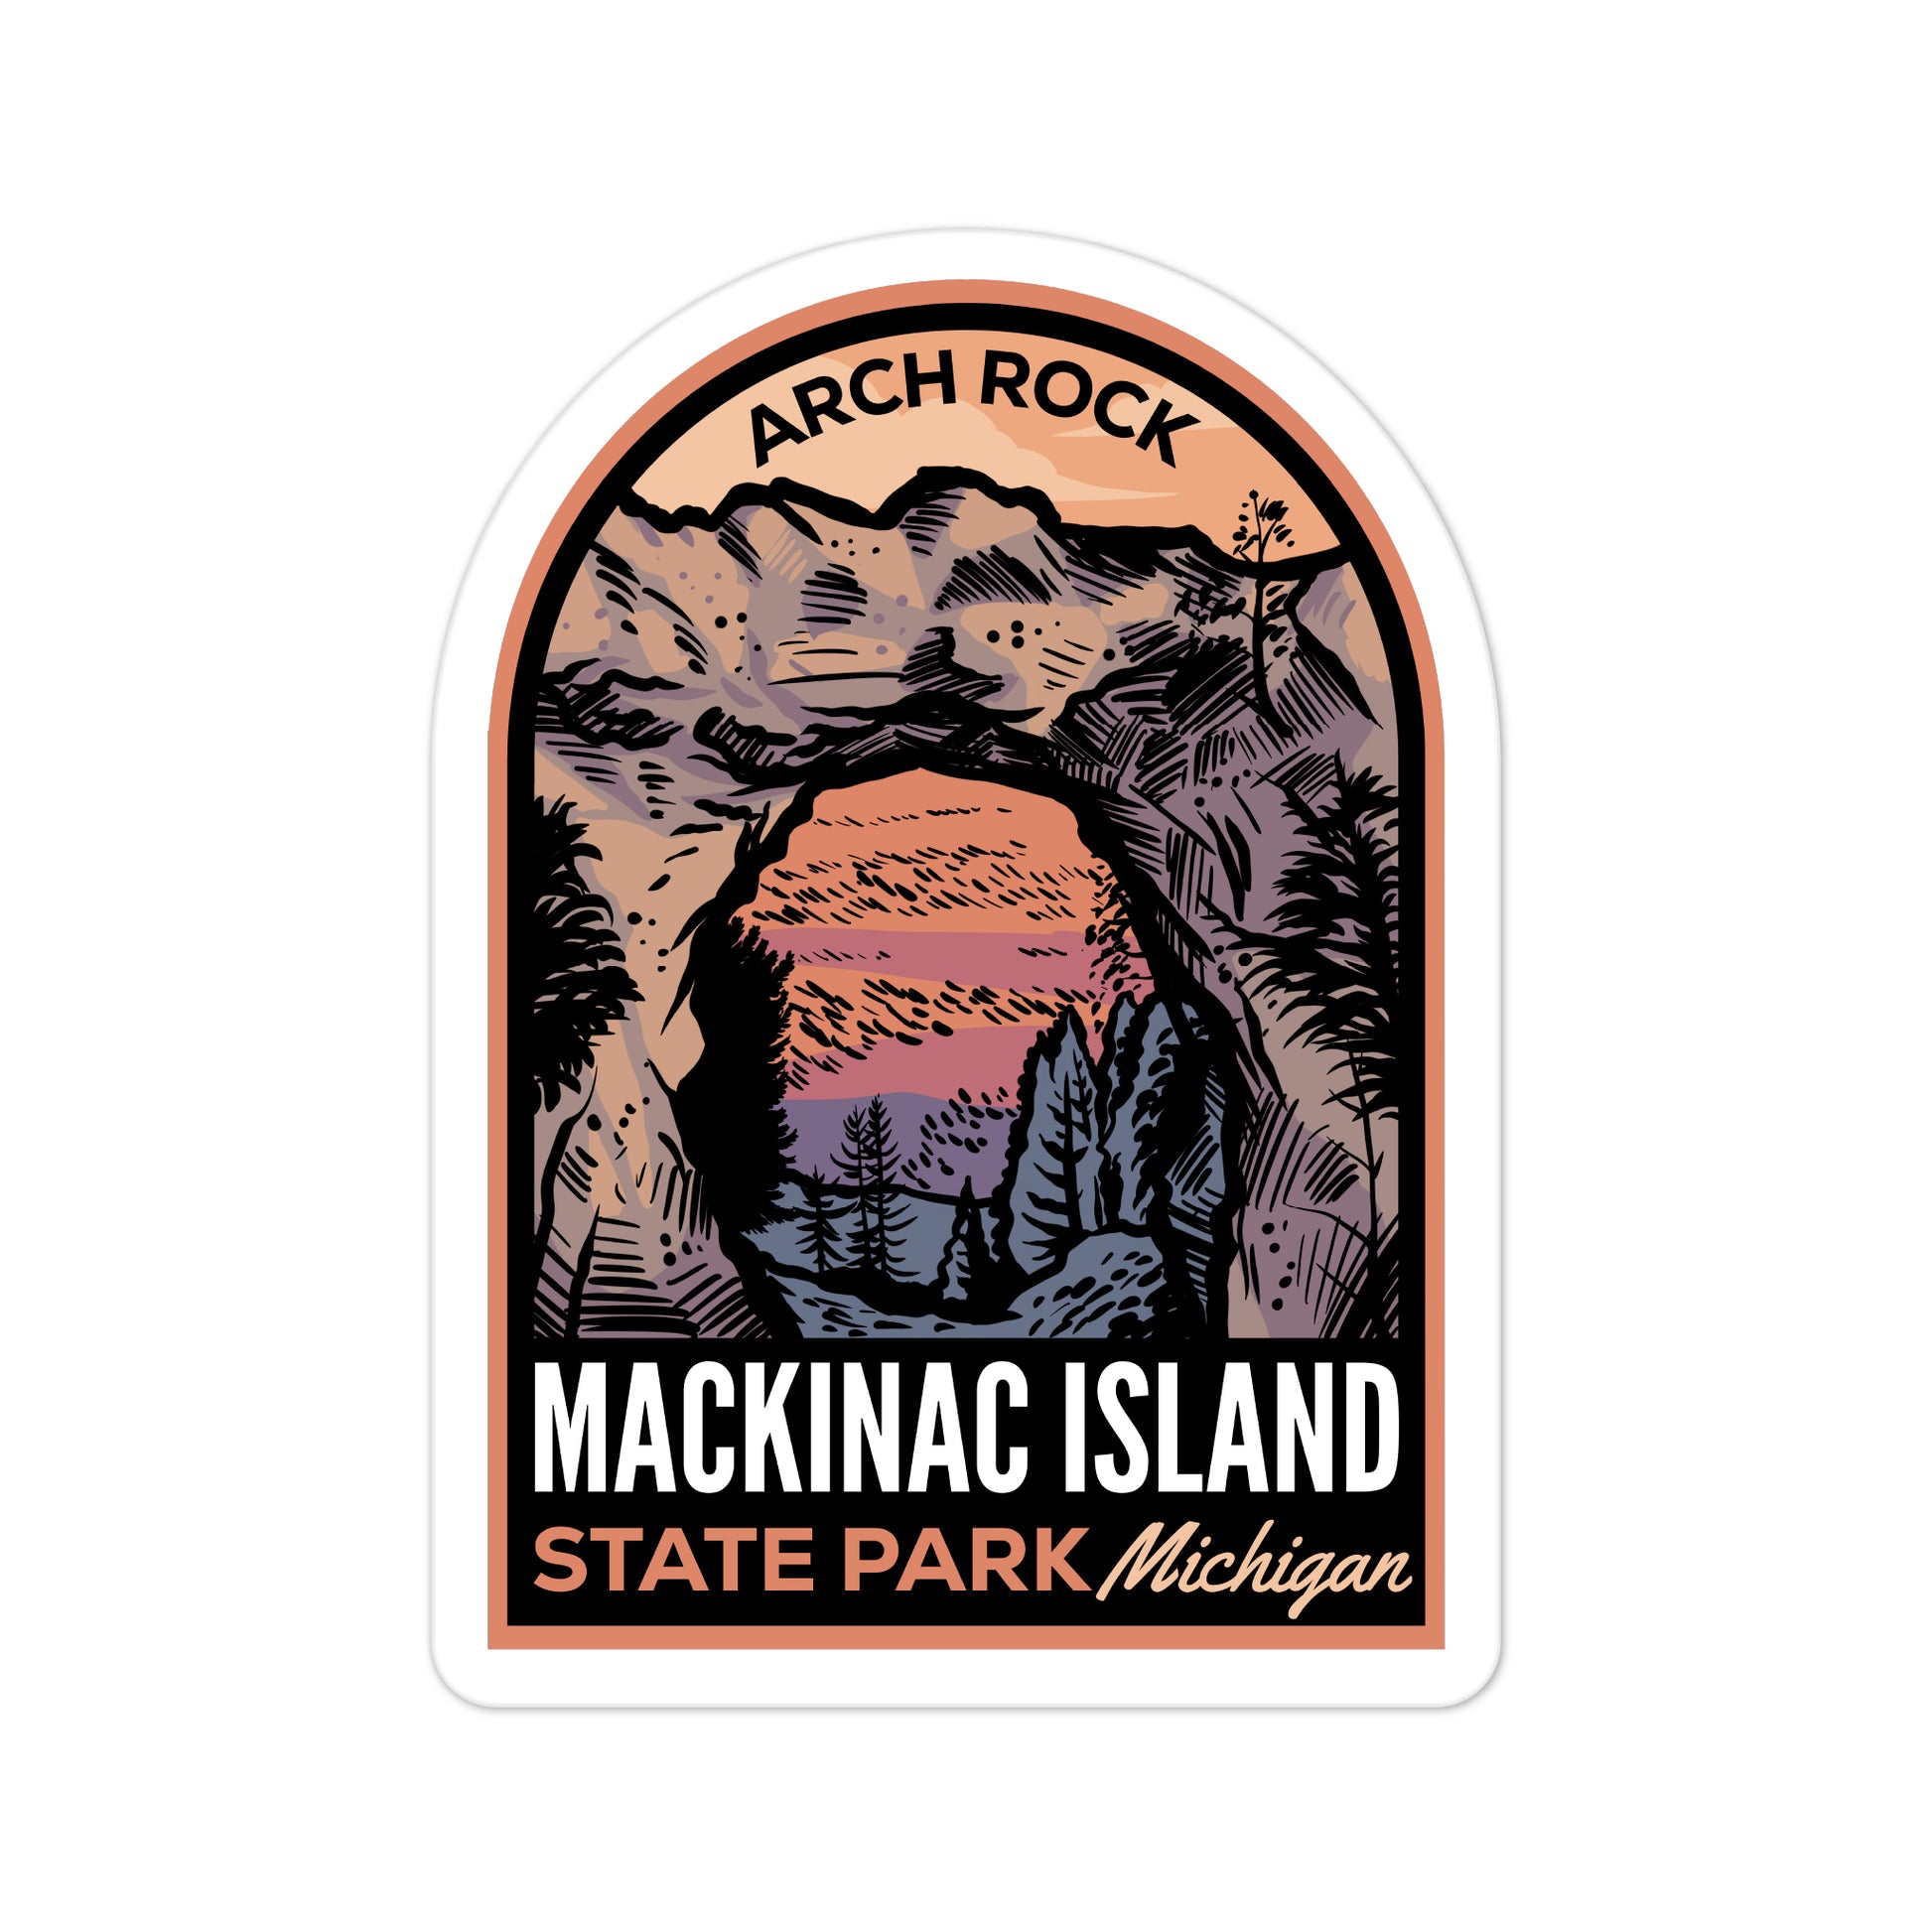 A sticker of Mackinac Island State Park